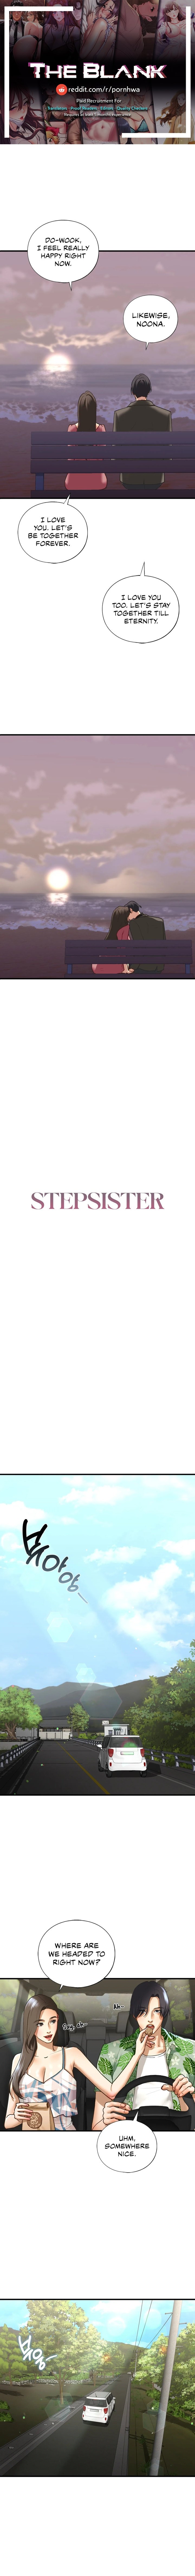 stepsister-chap-26-0